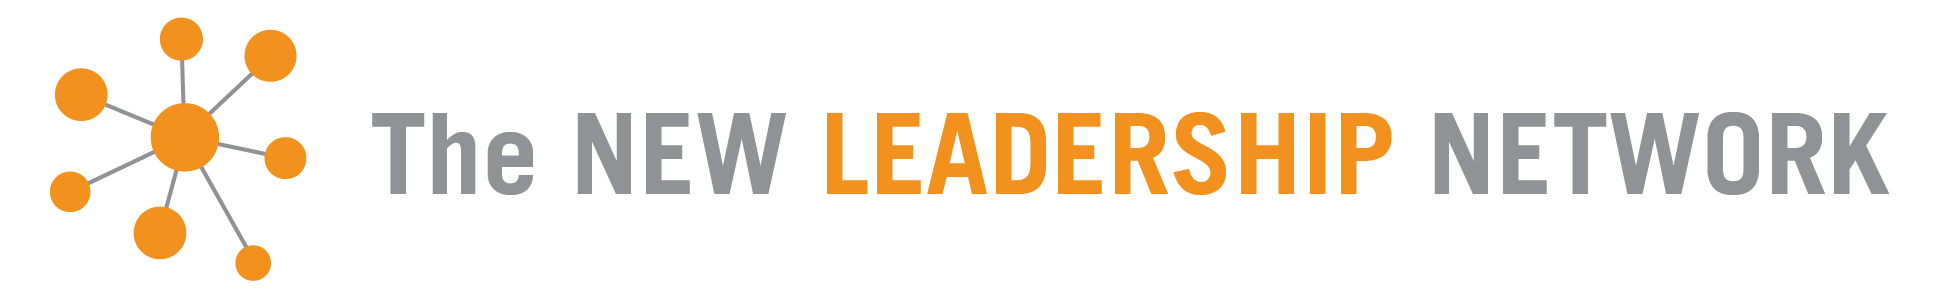 New Leadership Network